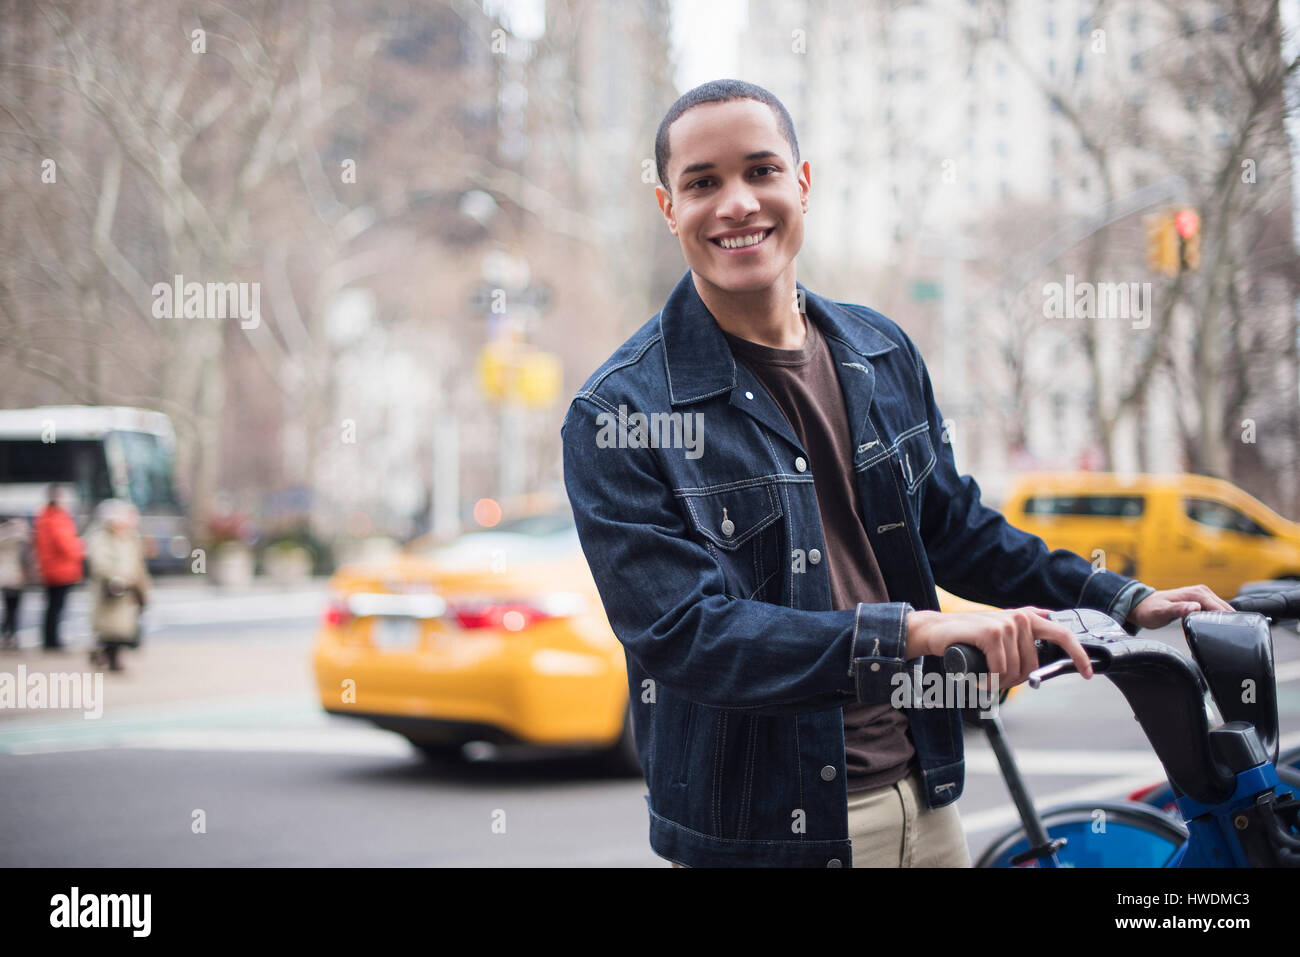 Young man using city bicycle, Manhattan, New York, USA Stock Photo